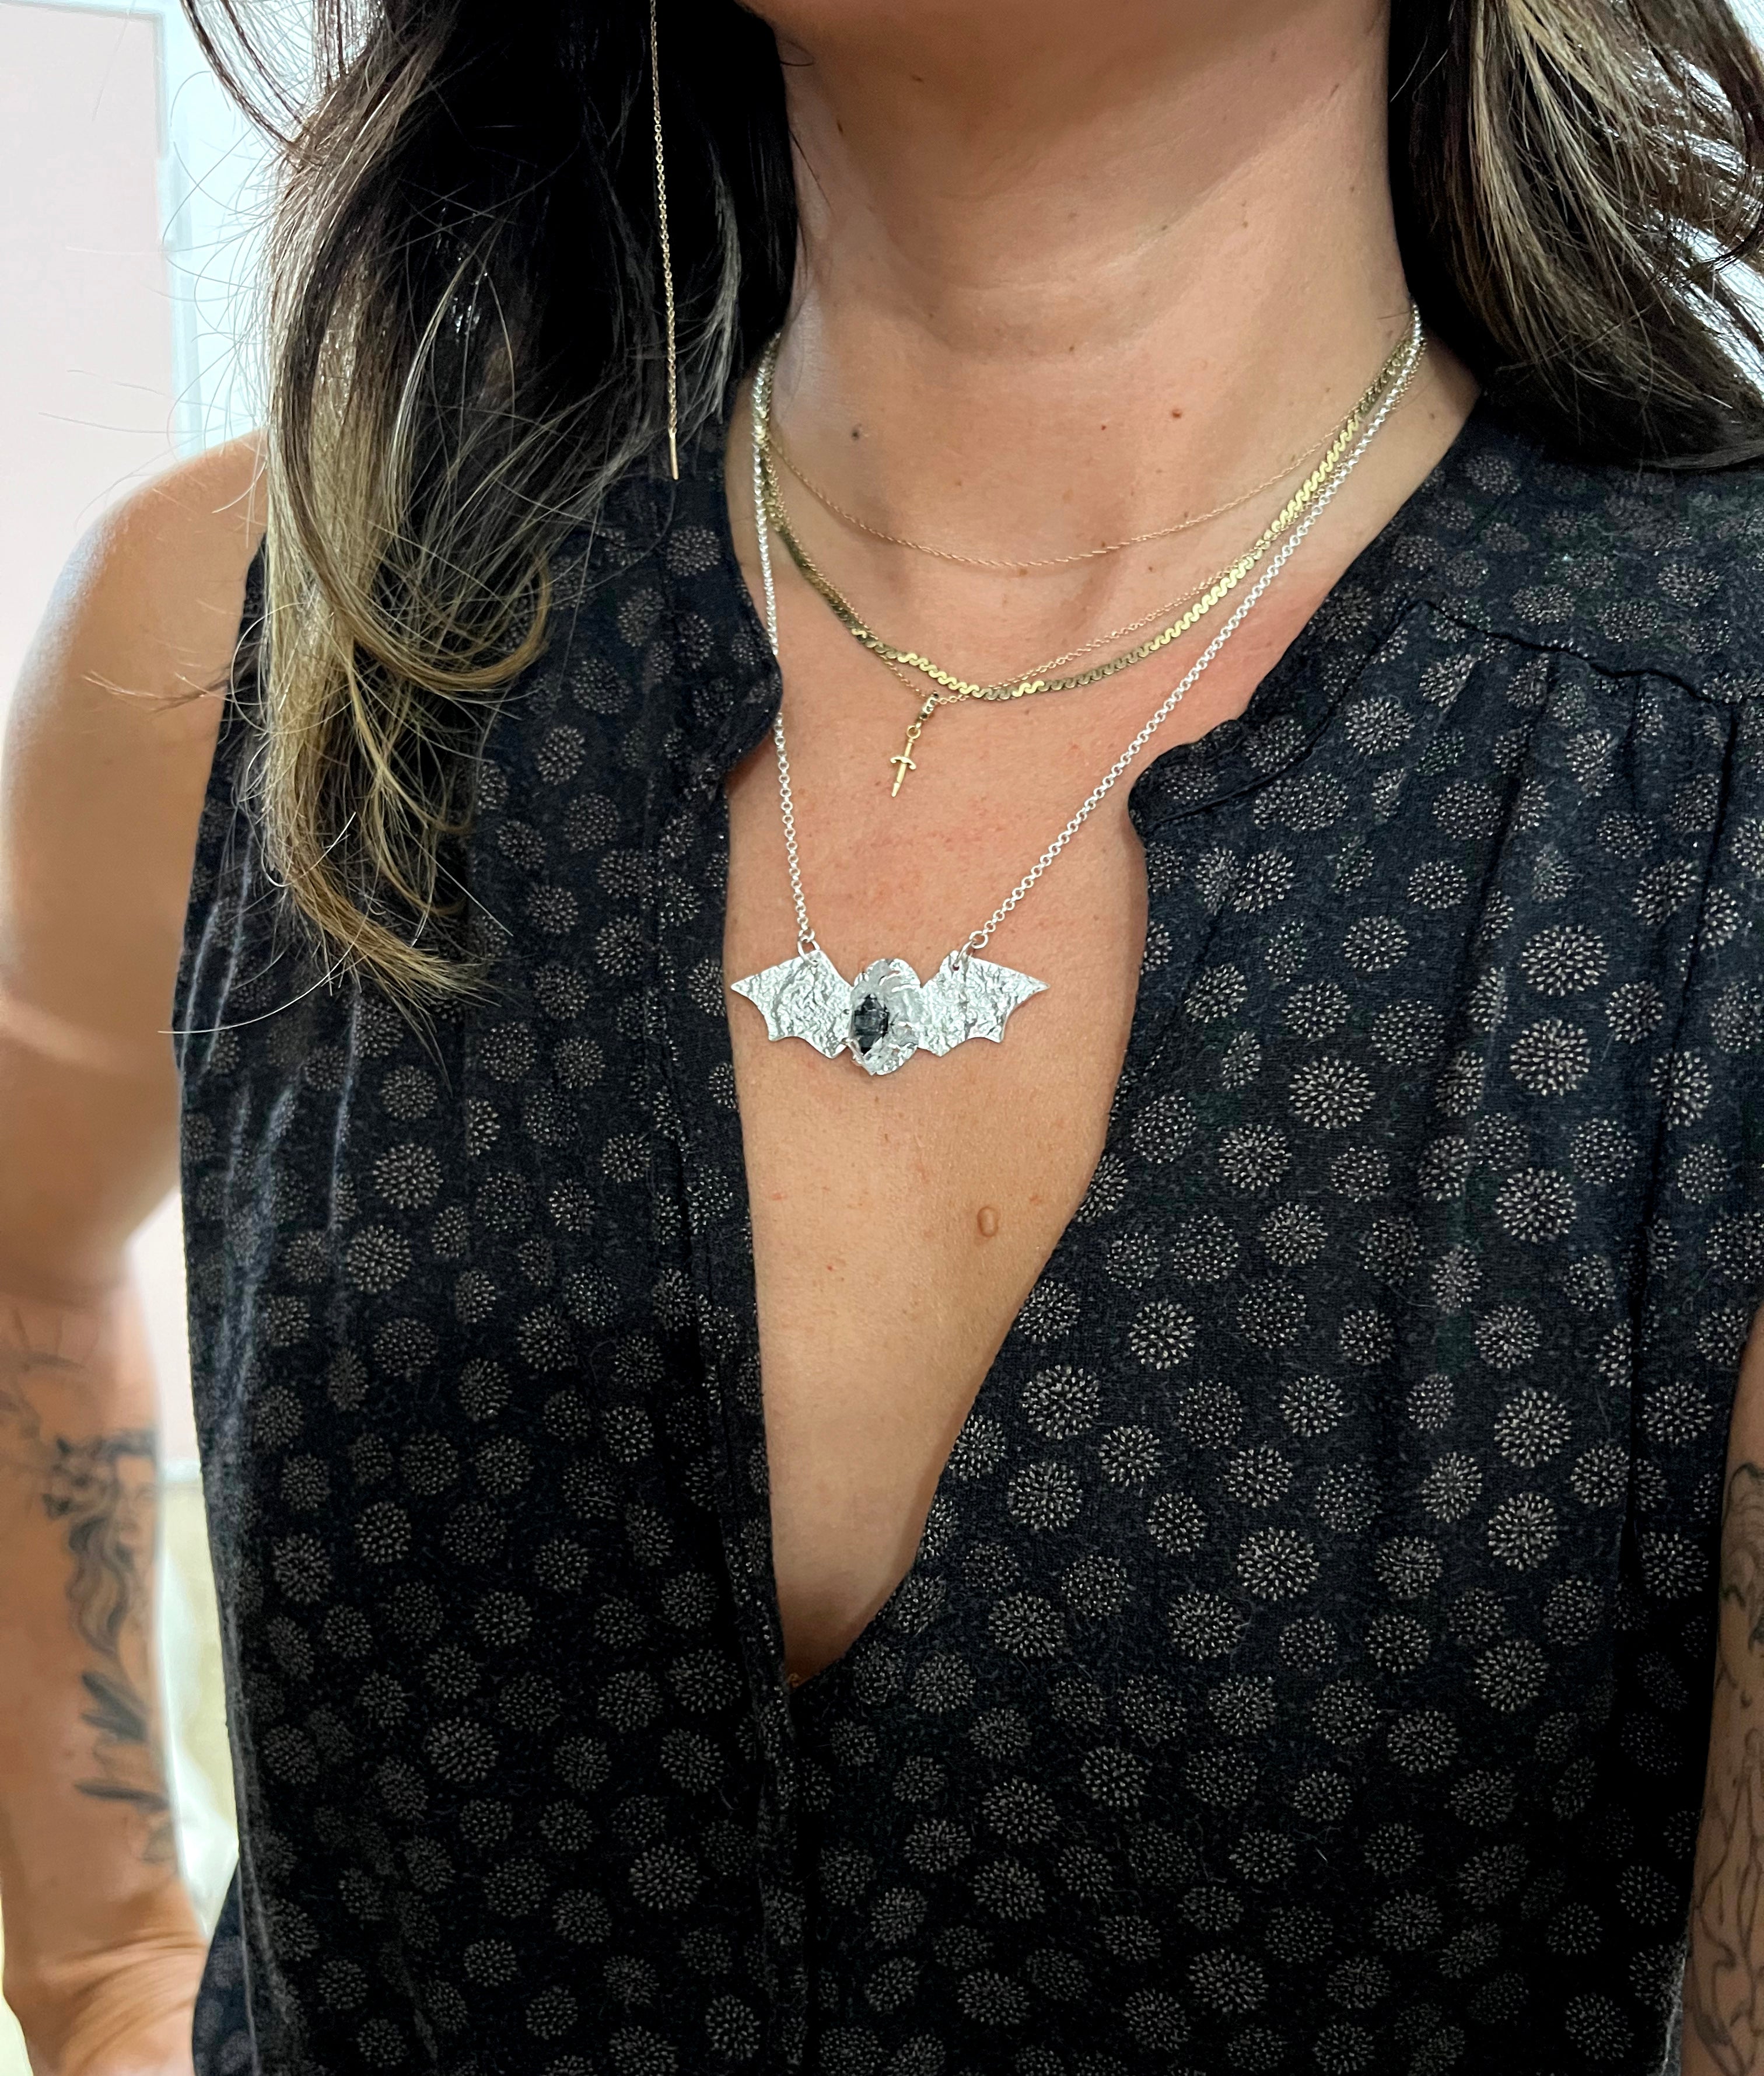 Bat Necklace with Herkimer Diamond